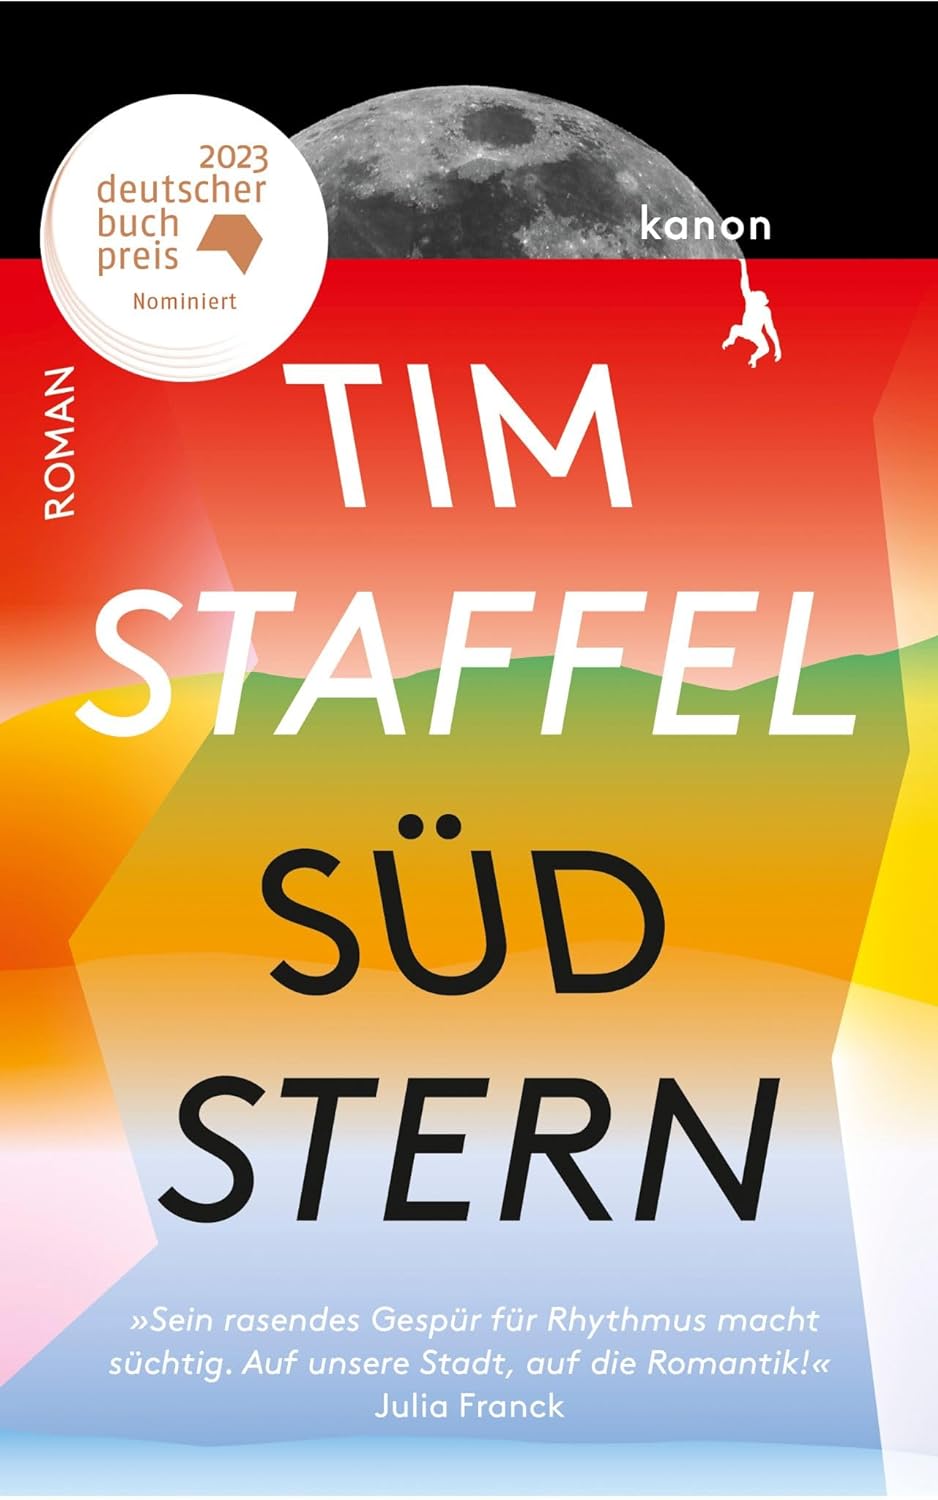 Tim Staffel: Südstern (Hardcover, Kanon Verlag Berlin)